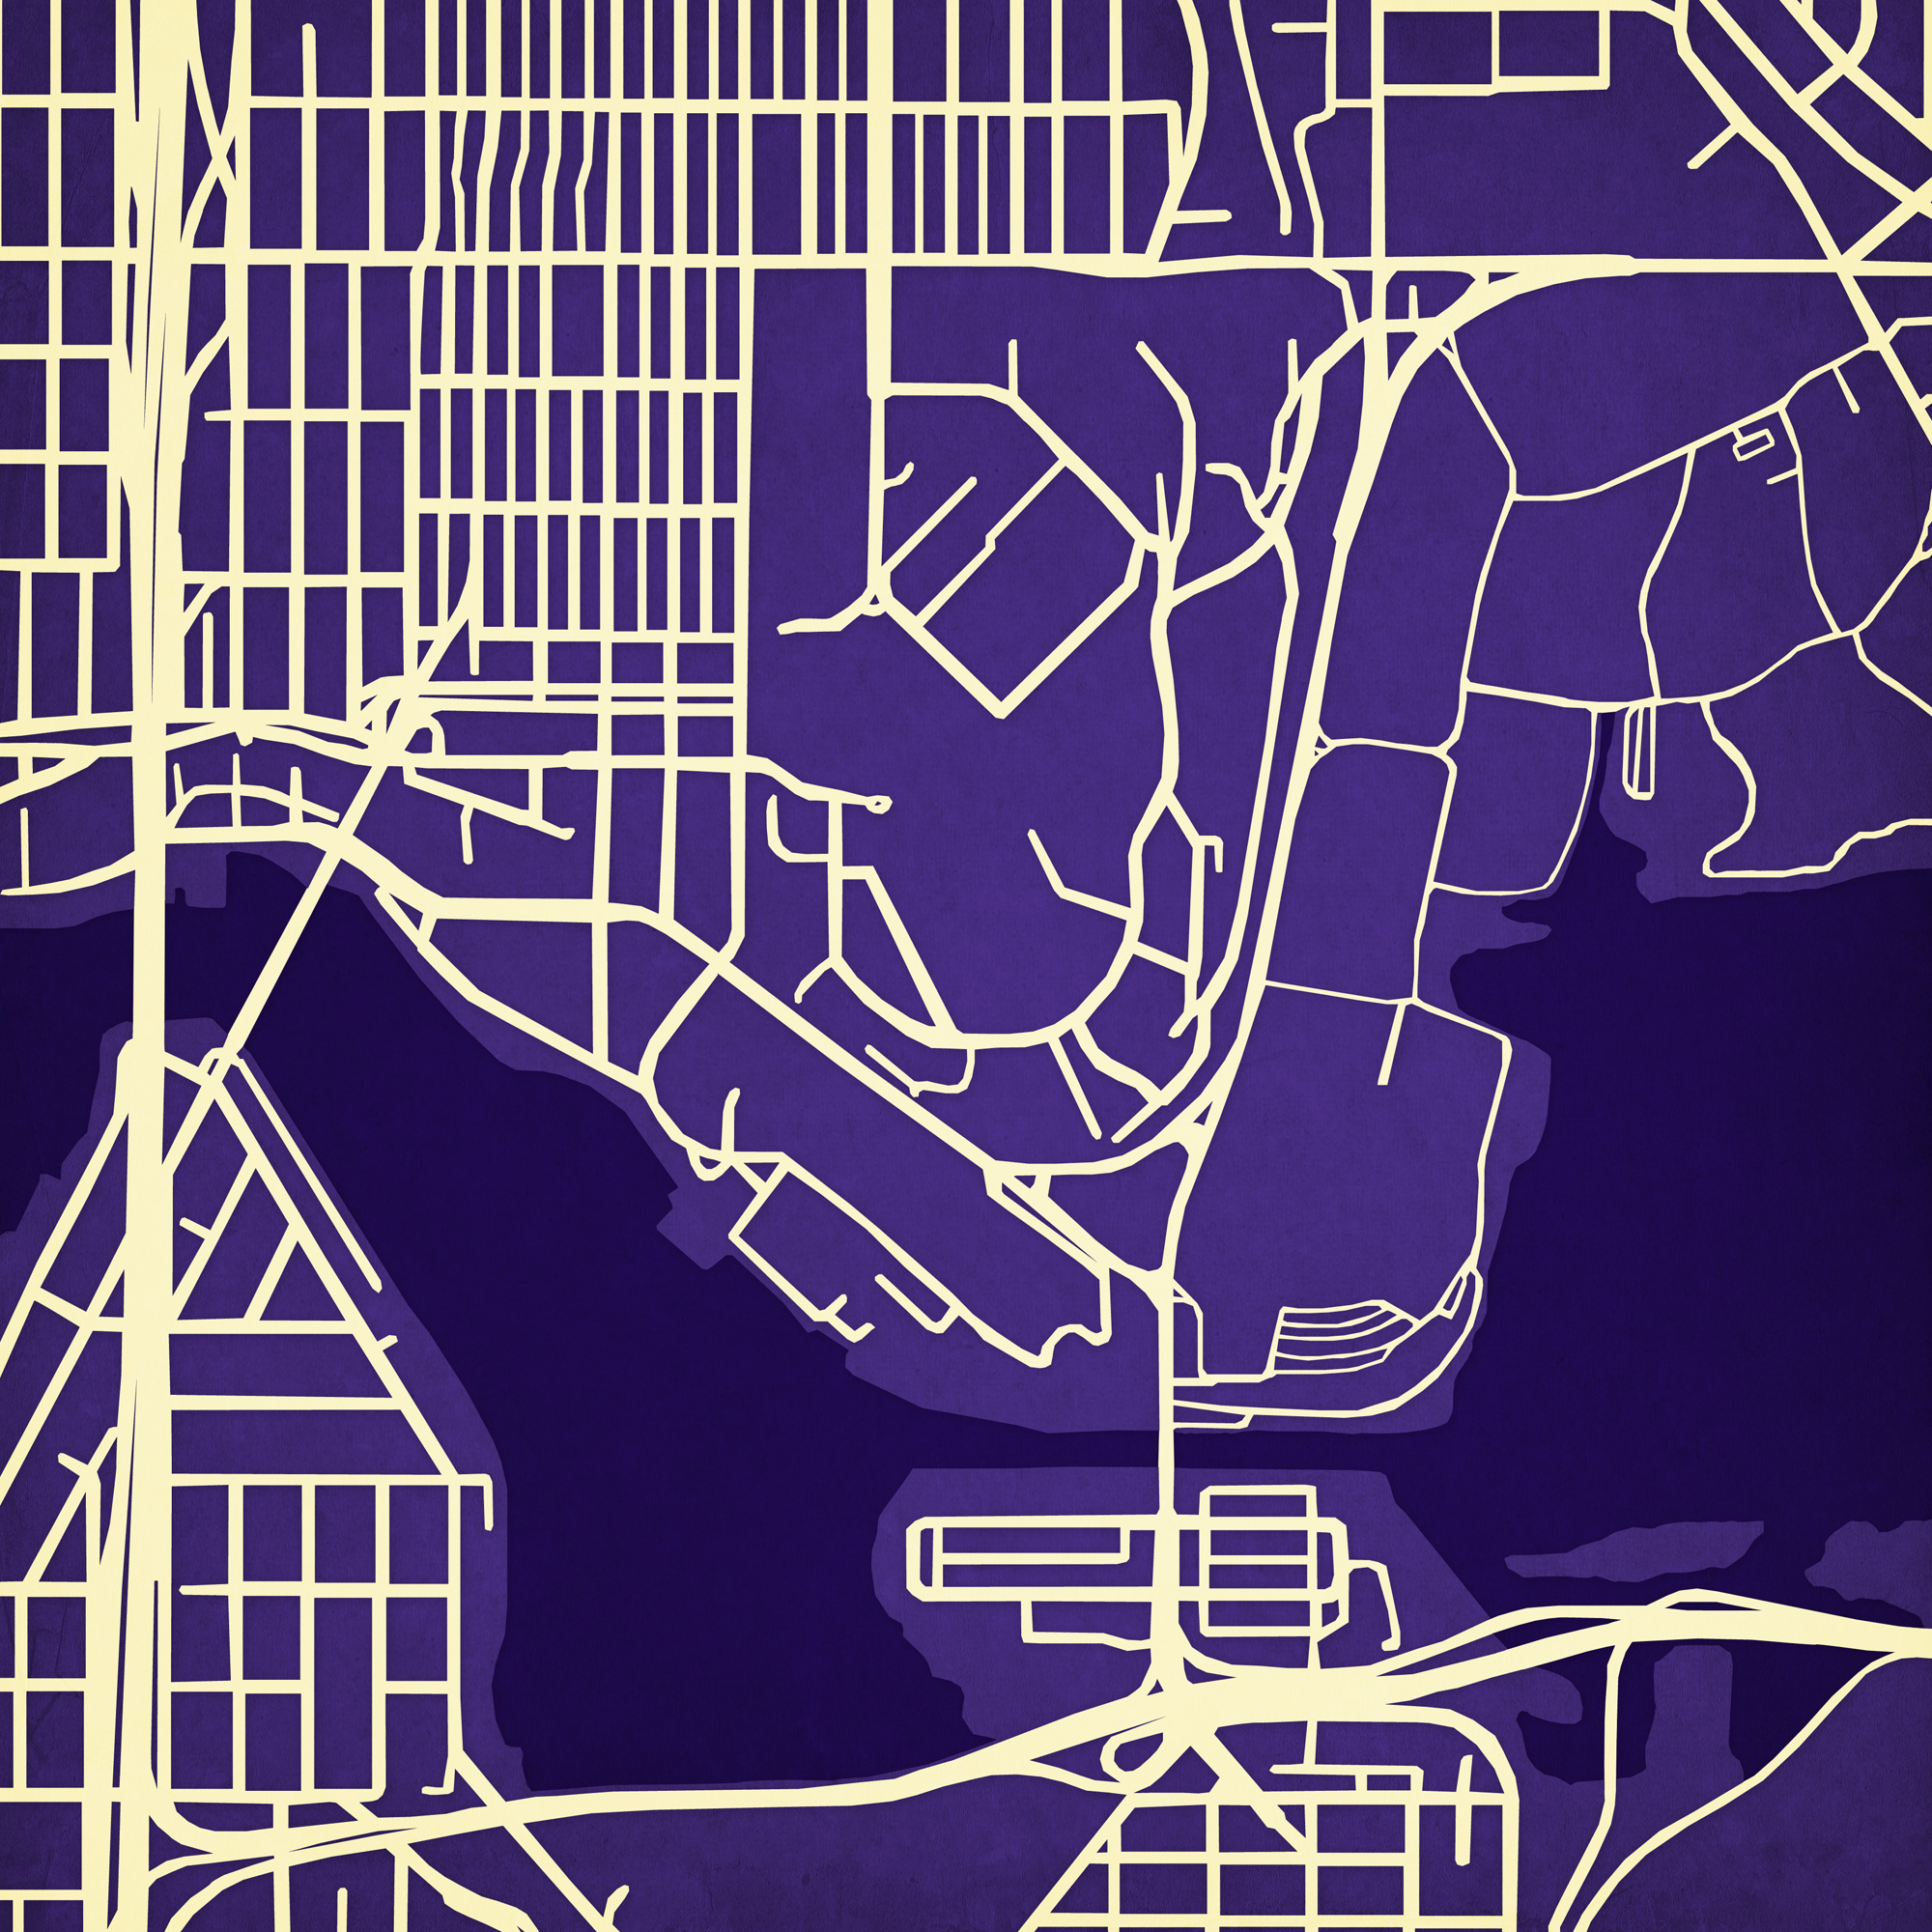 University of Washington Campus Map Art - City Prints